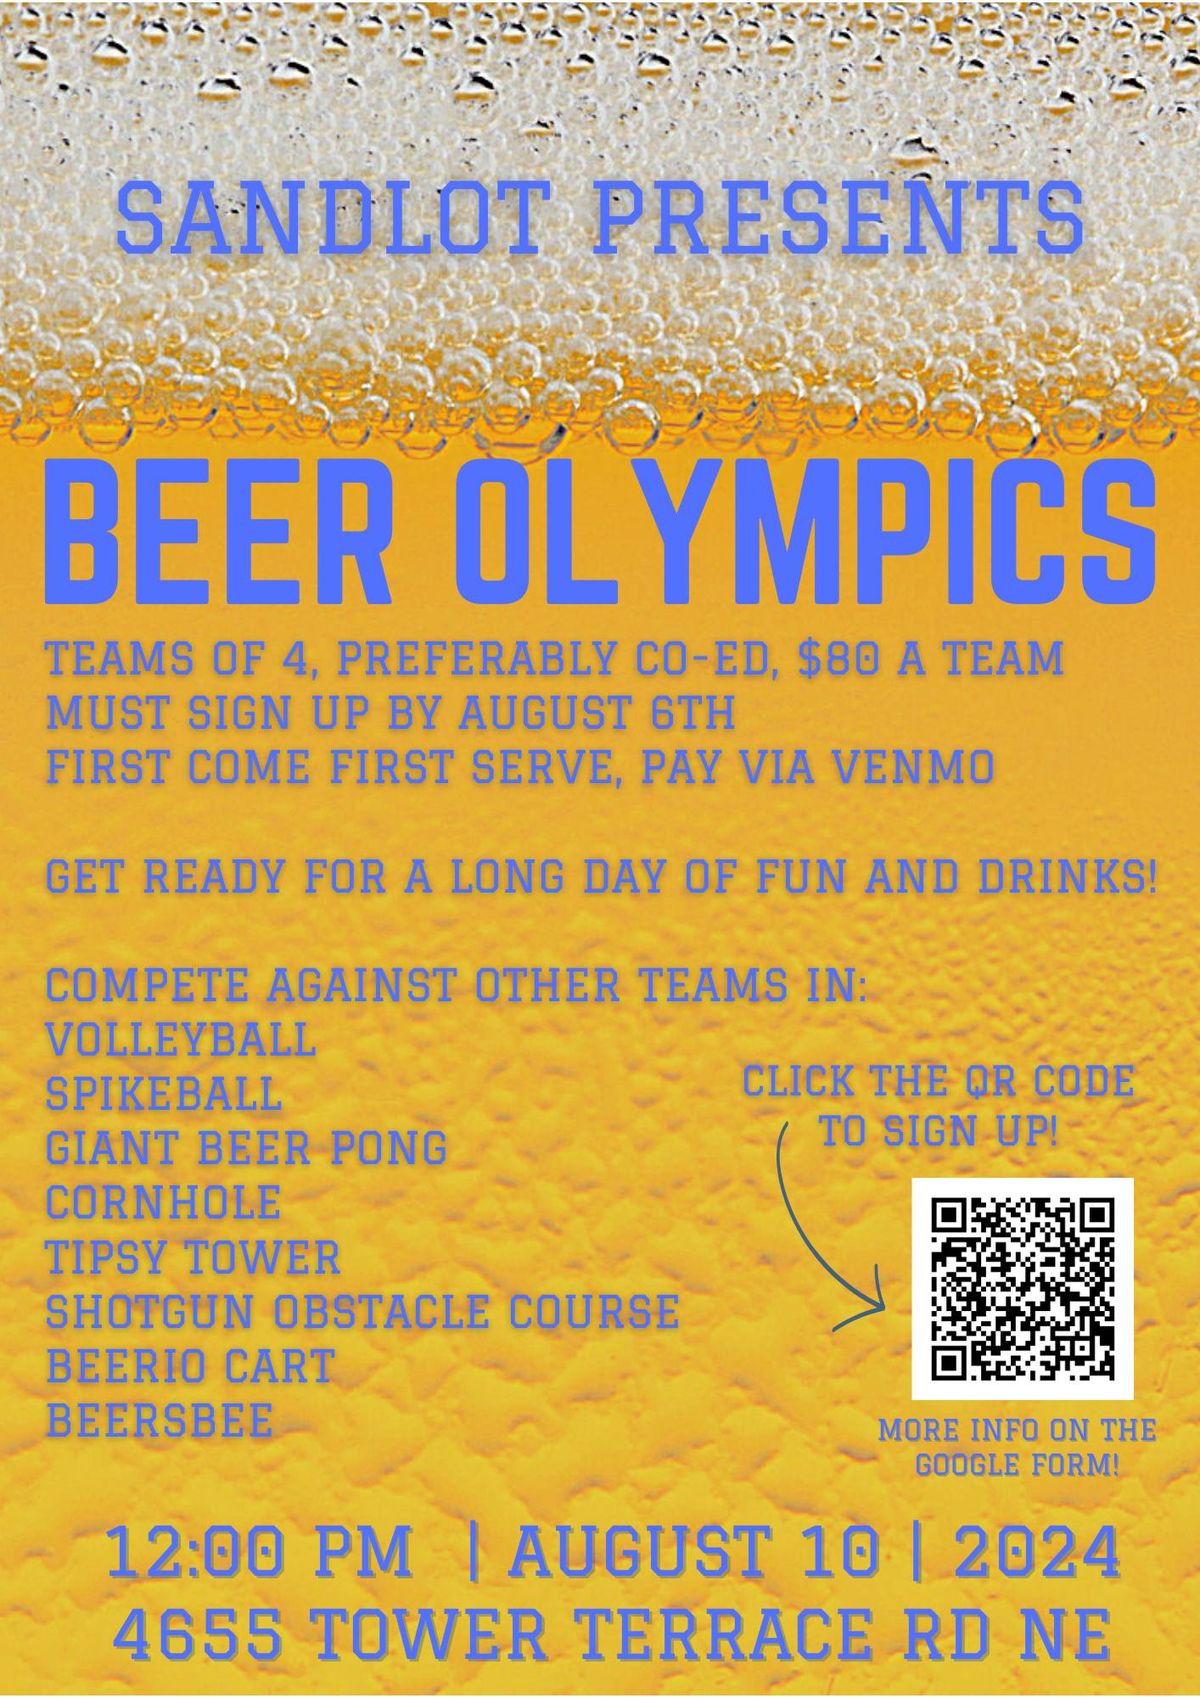 Beer Olympics - Part 2!